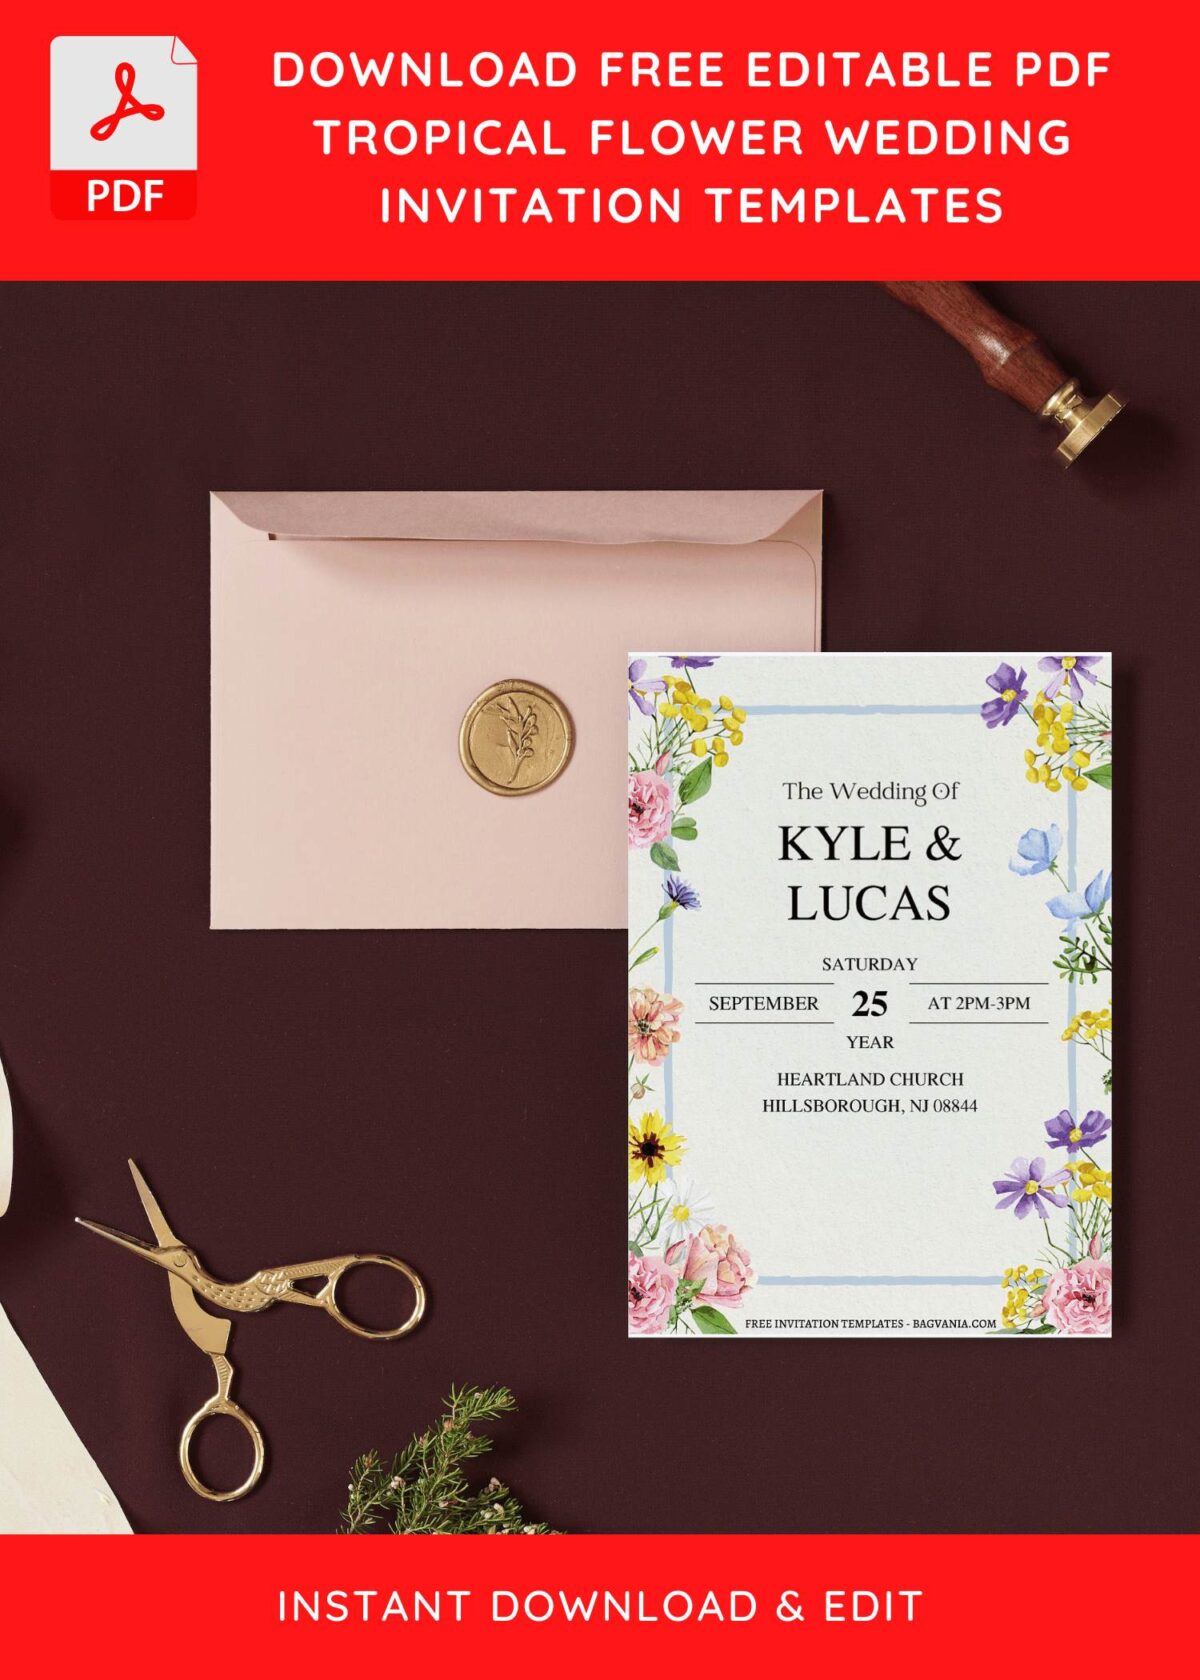 (Free Editable PDF) Pristine Wildflowers Wedding Invitation Templates I